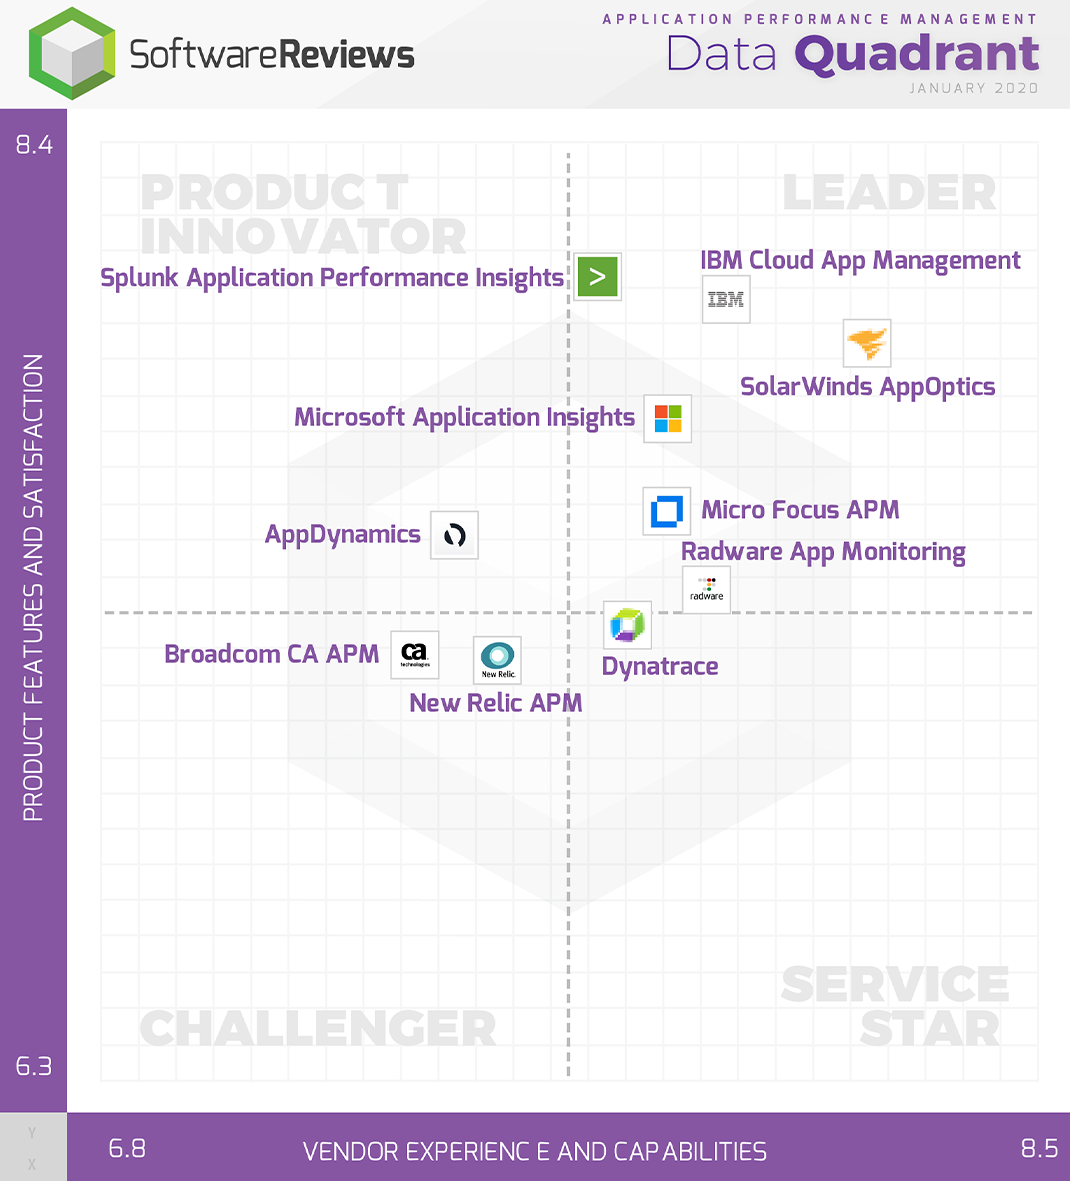 2020 Application Performance Management Data Quadrant